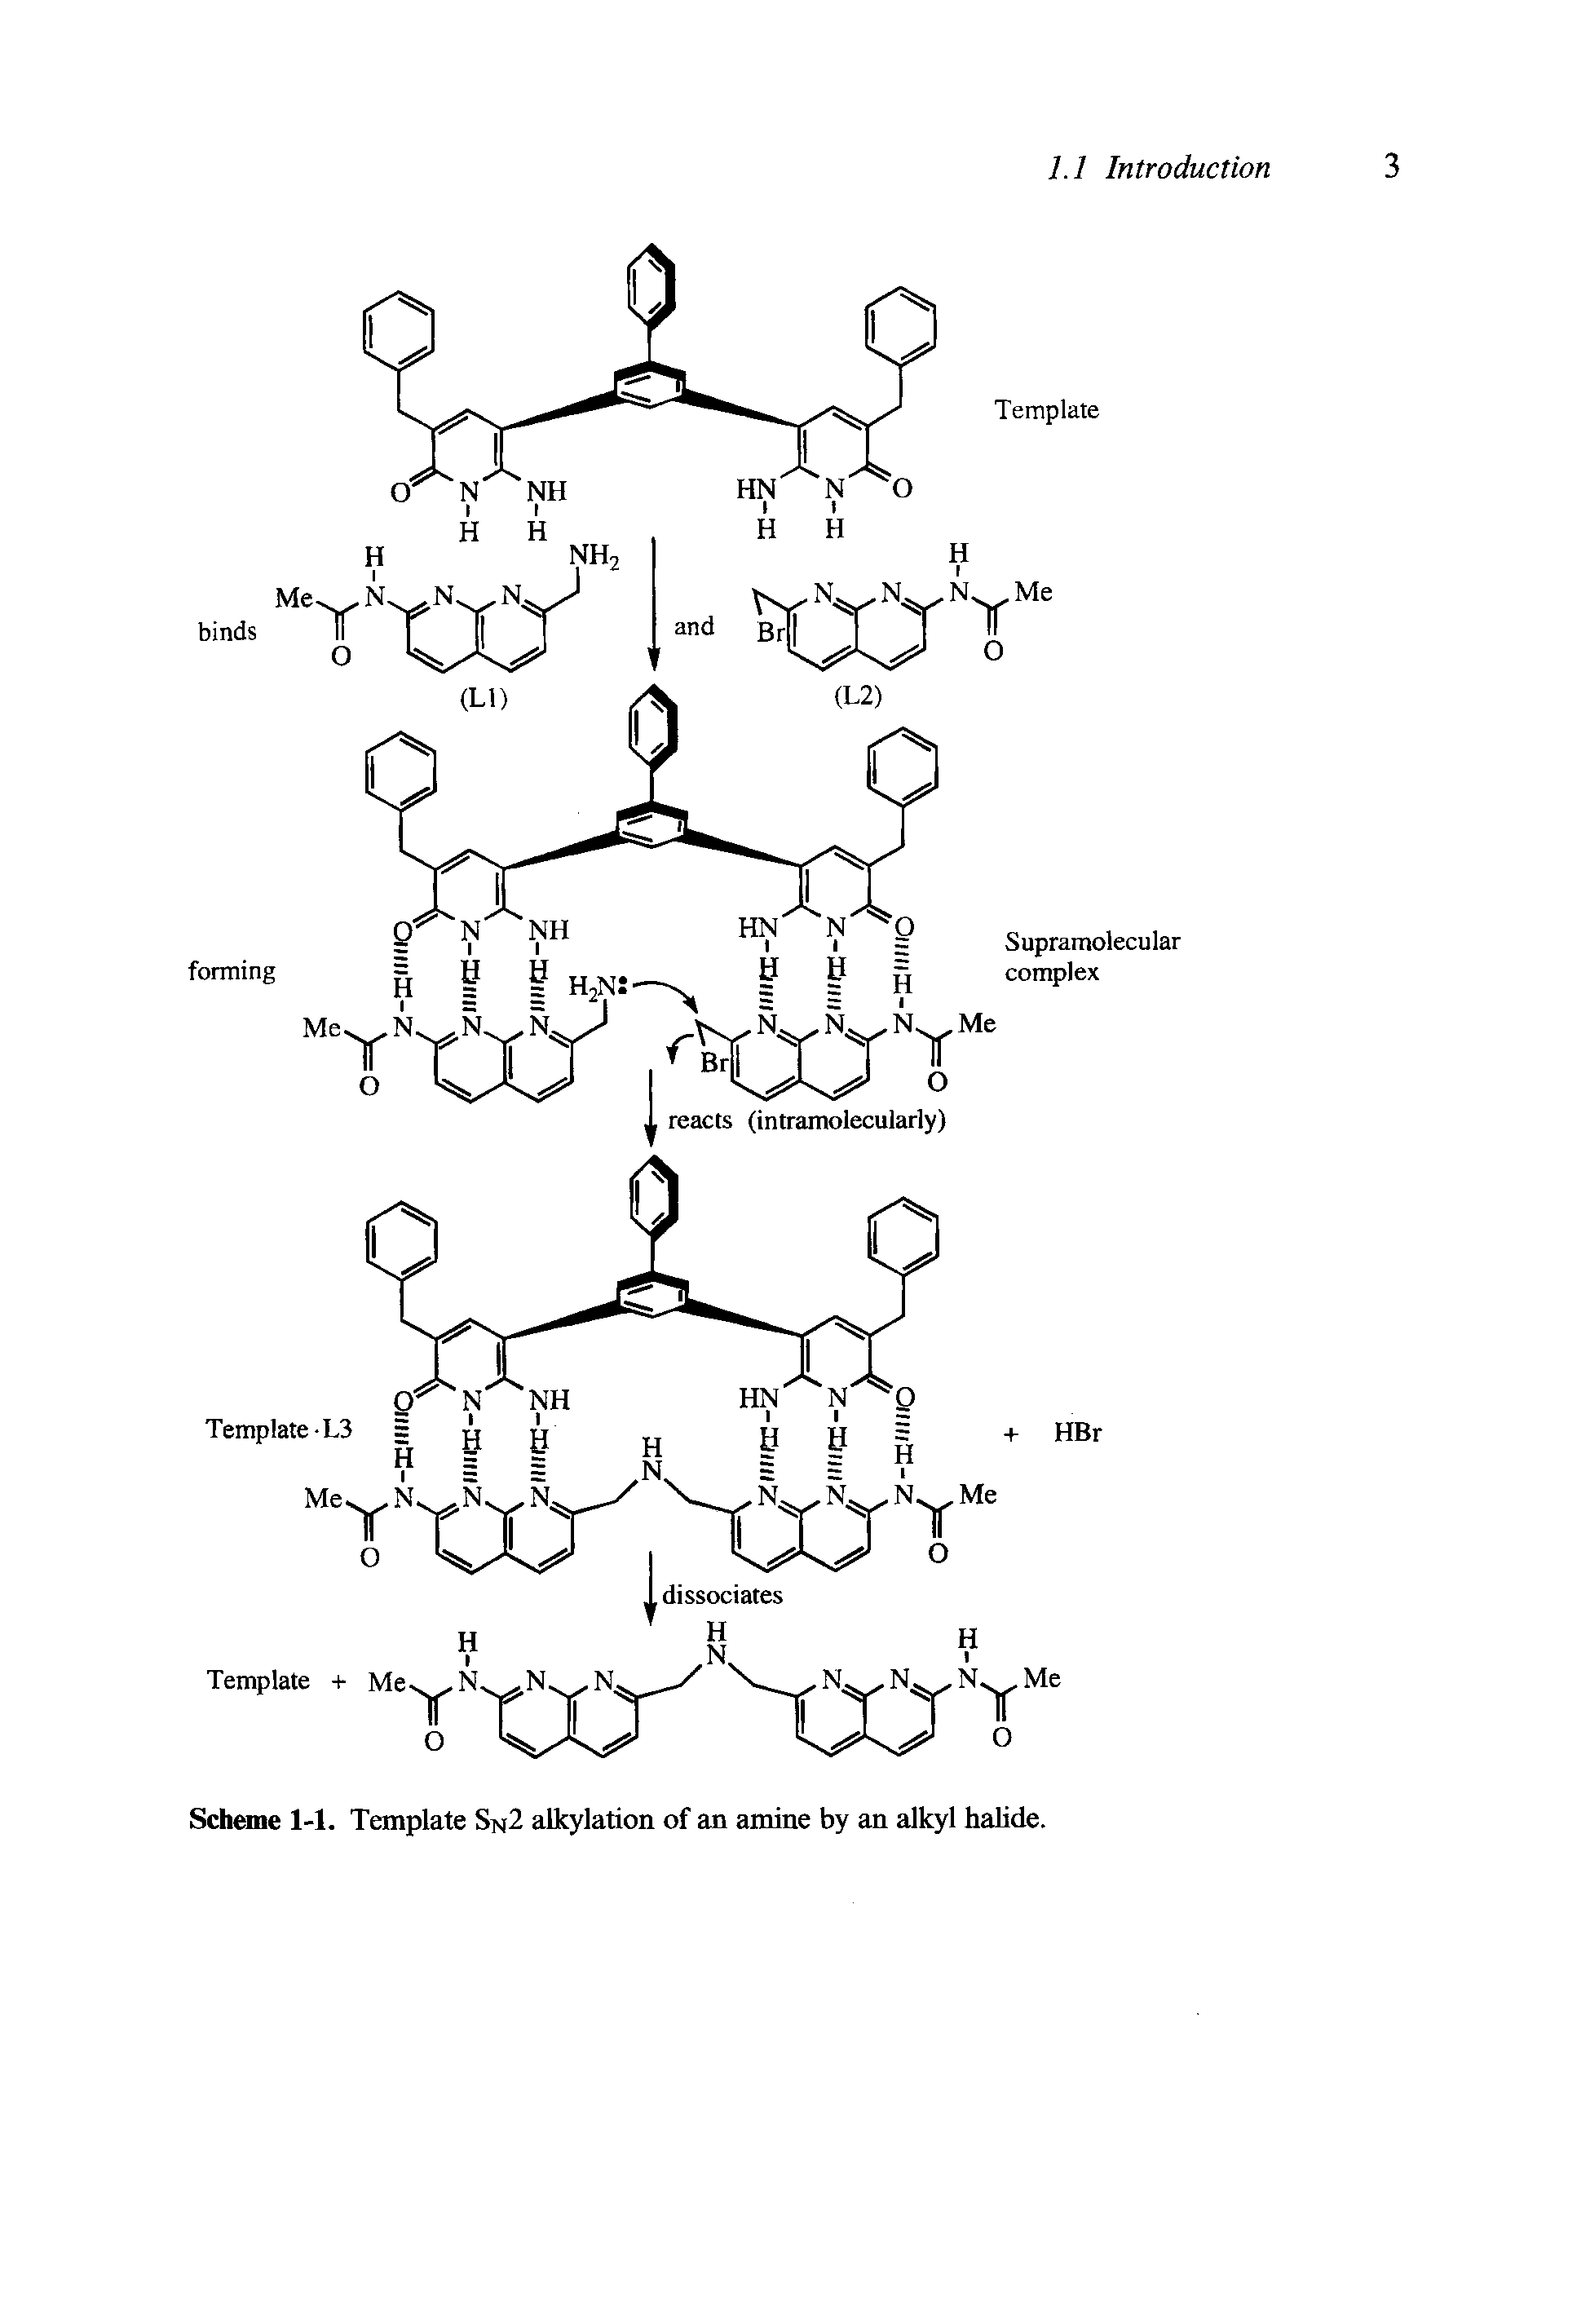 Scheme 1-1. Template Sn2 alkylation of an amine by an alkyl halide.